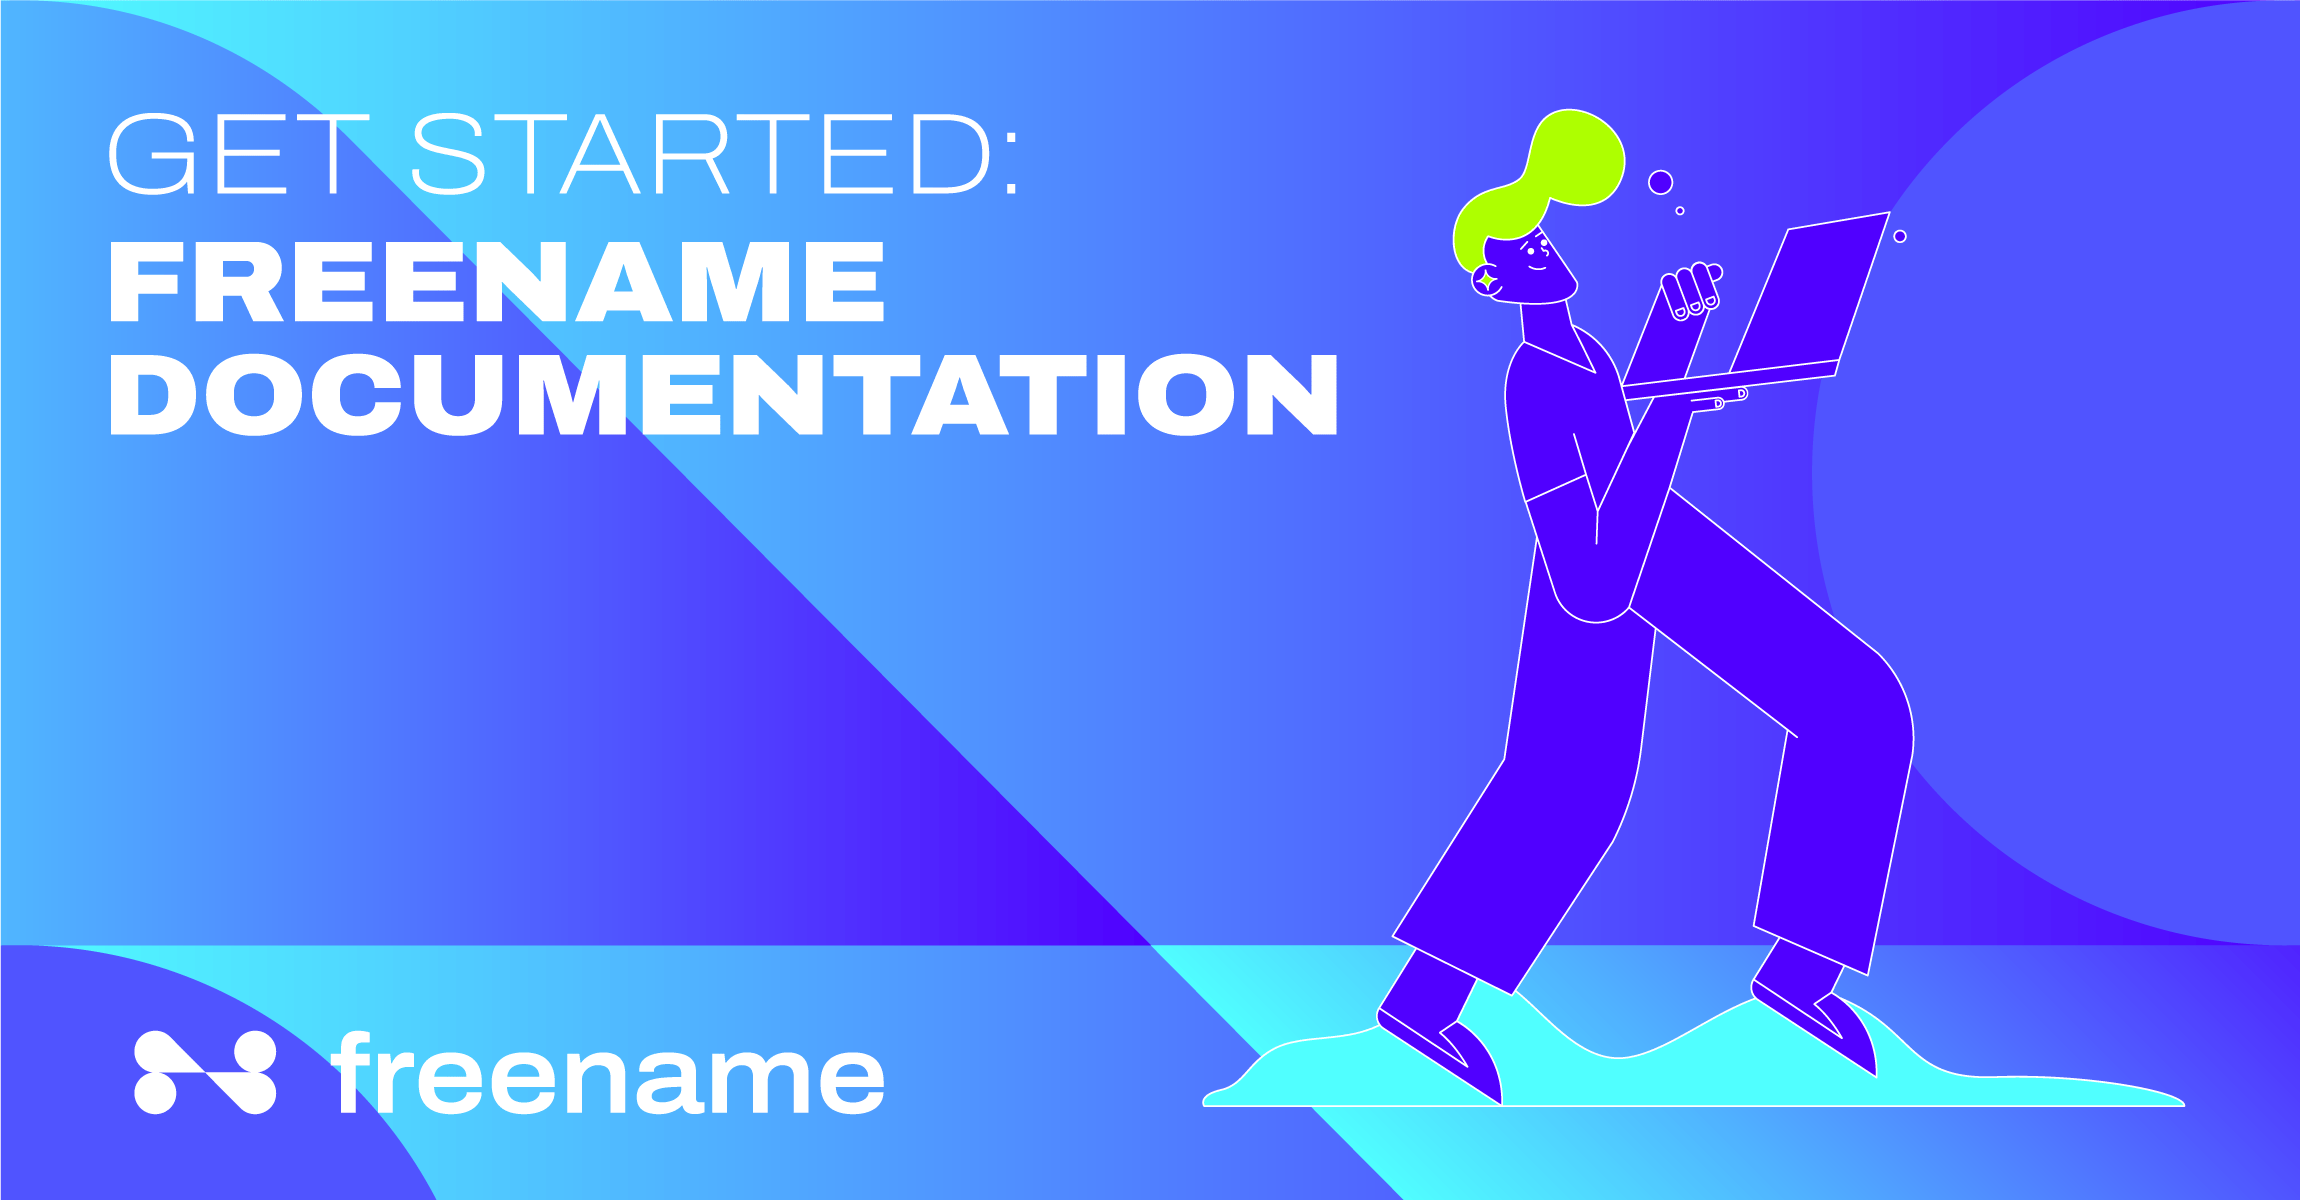 Get Started: Freename Documentation